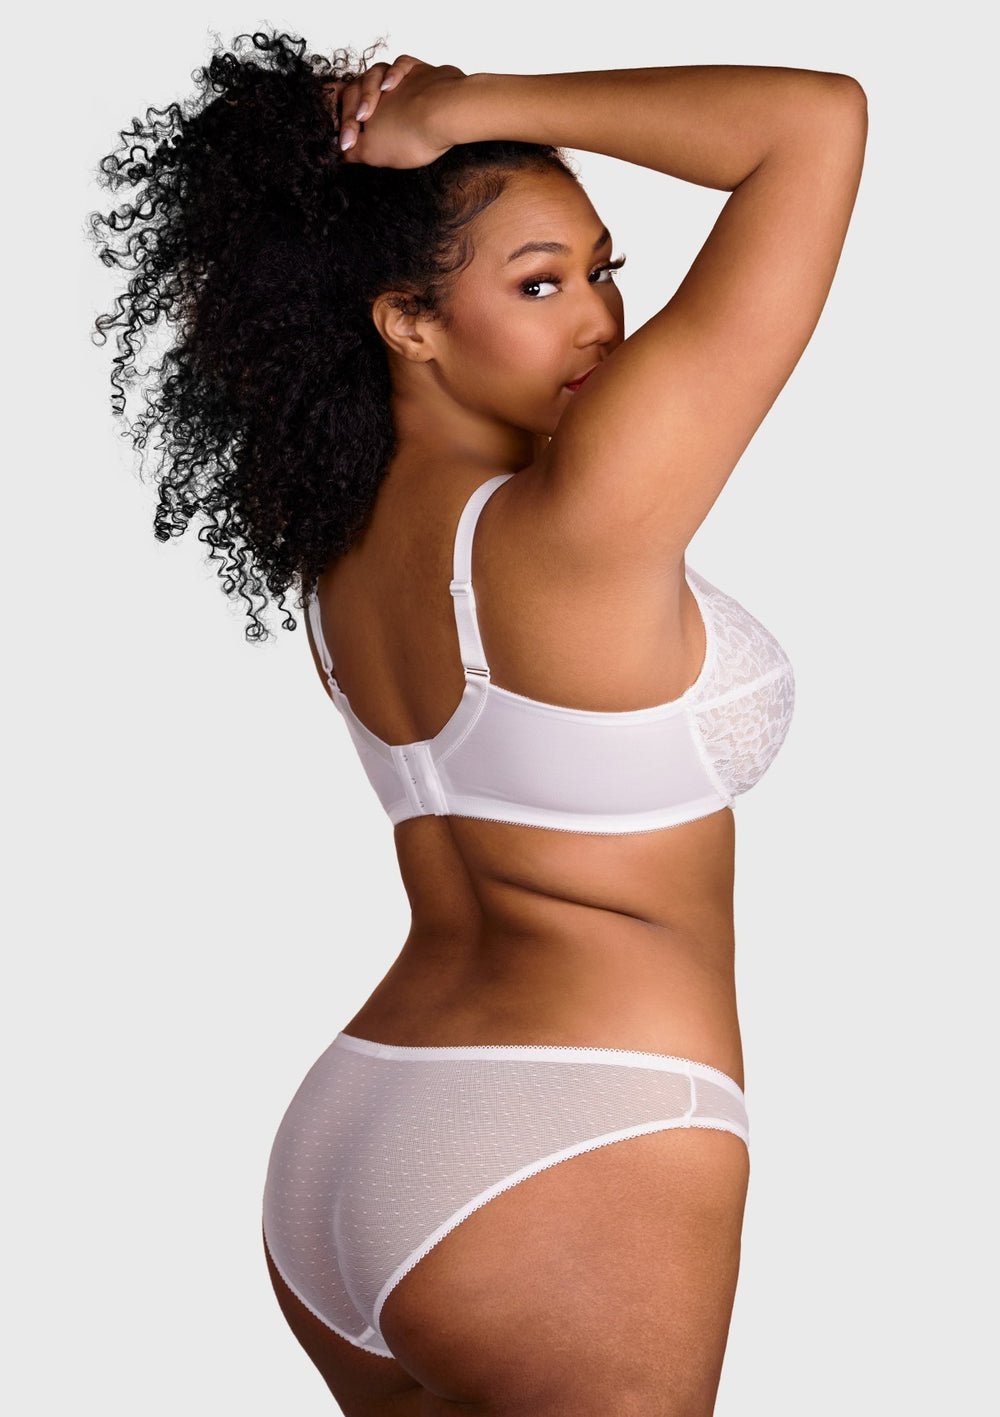 frugue Women's Minimizer Plus Size Sheer Lace Unlined Bra White 34